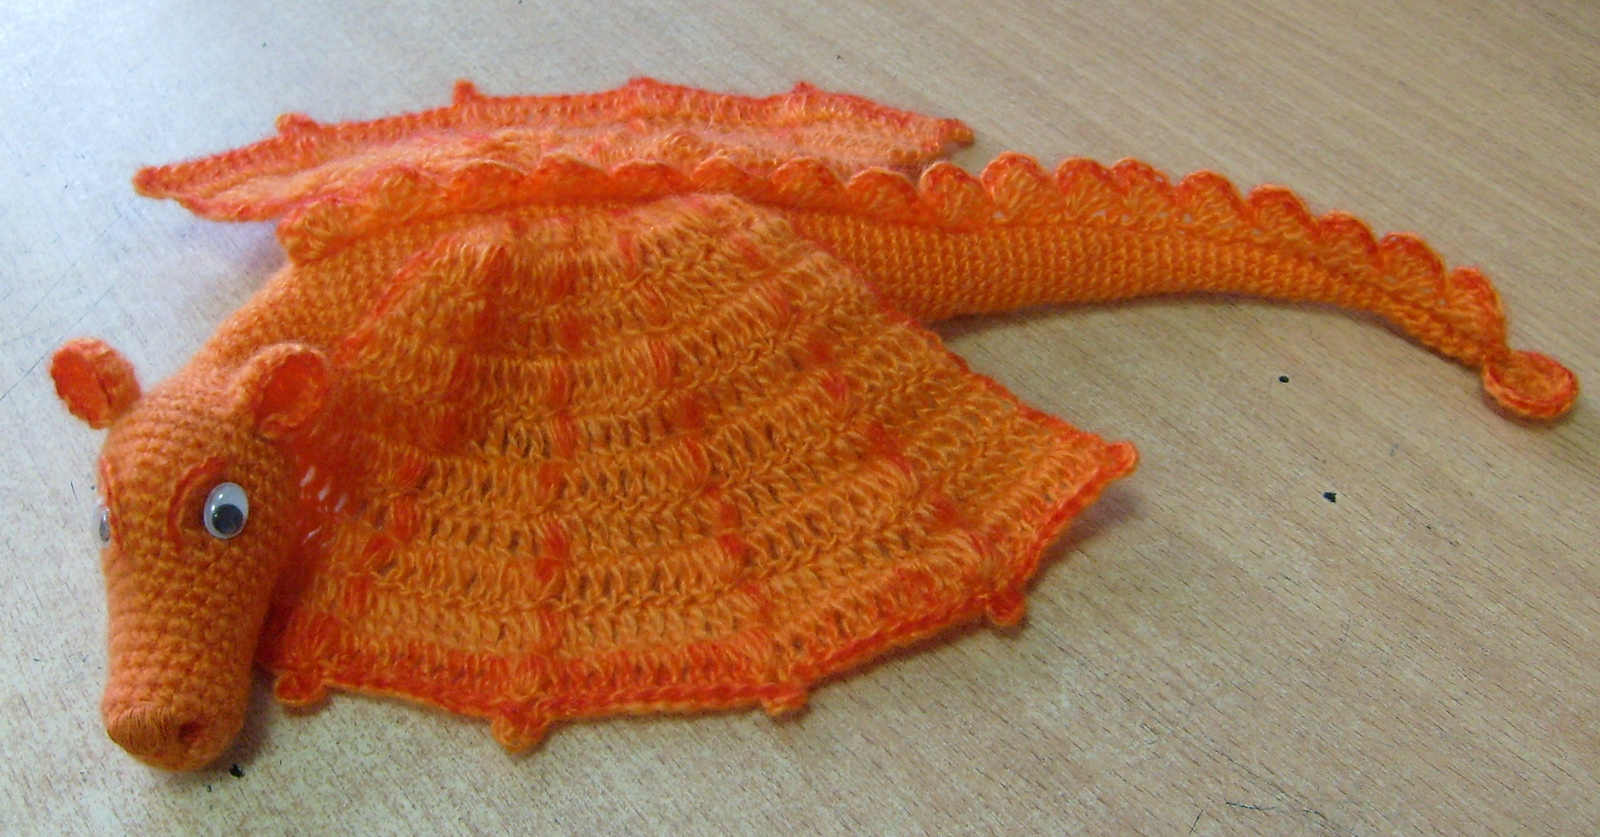 Apelsin the Dragon Amigurumi Free Crochet Pattern